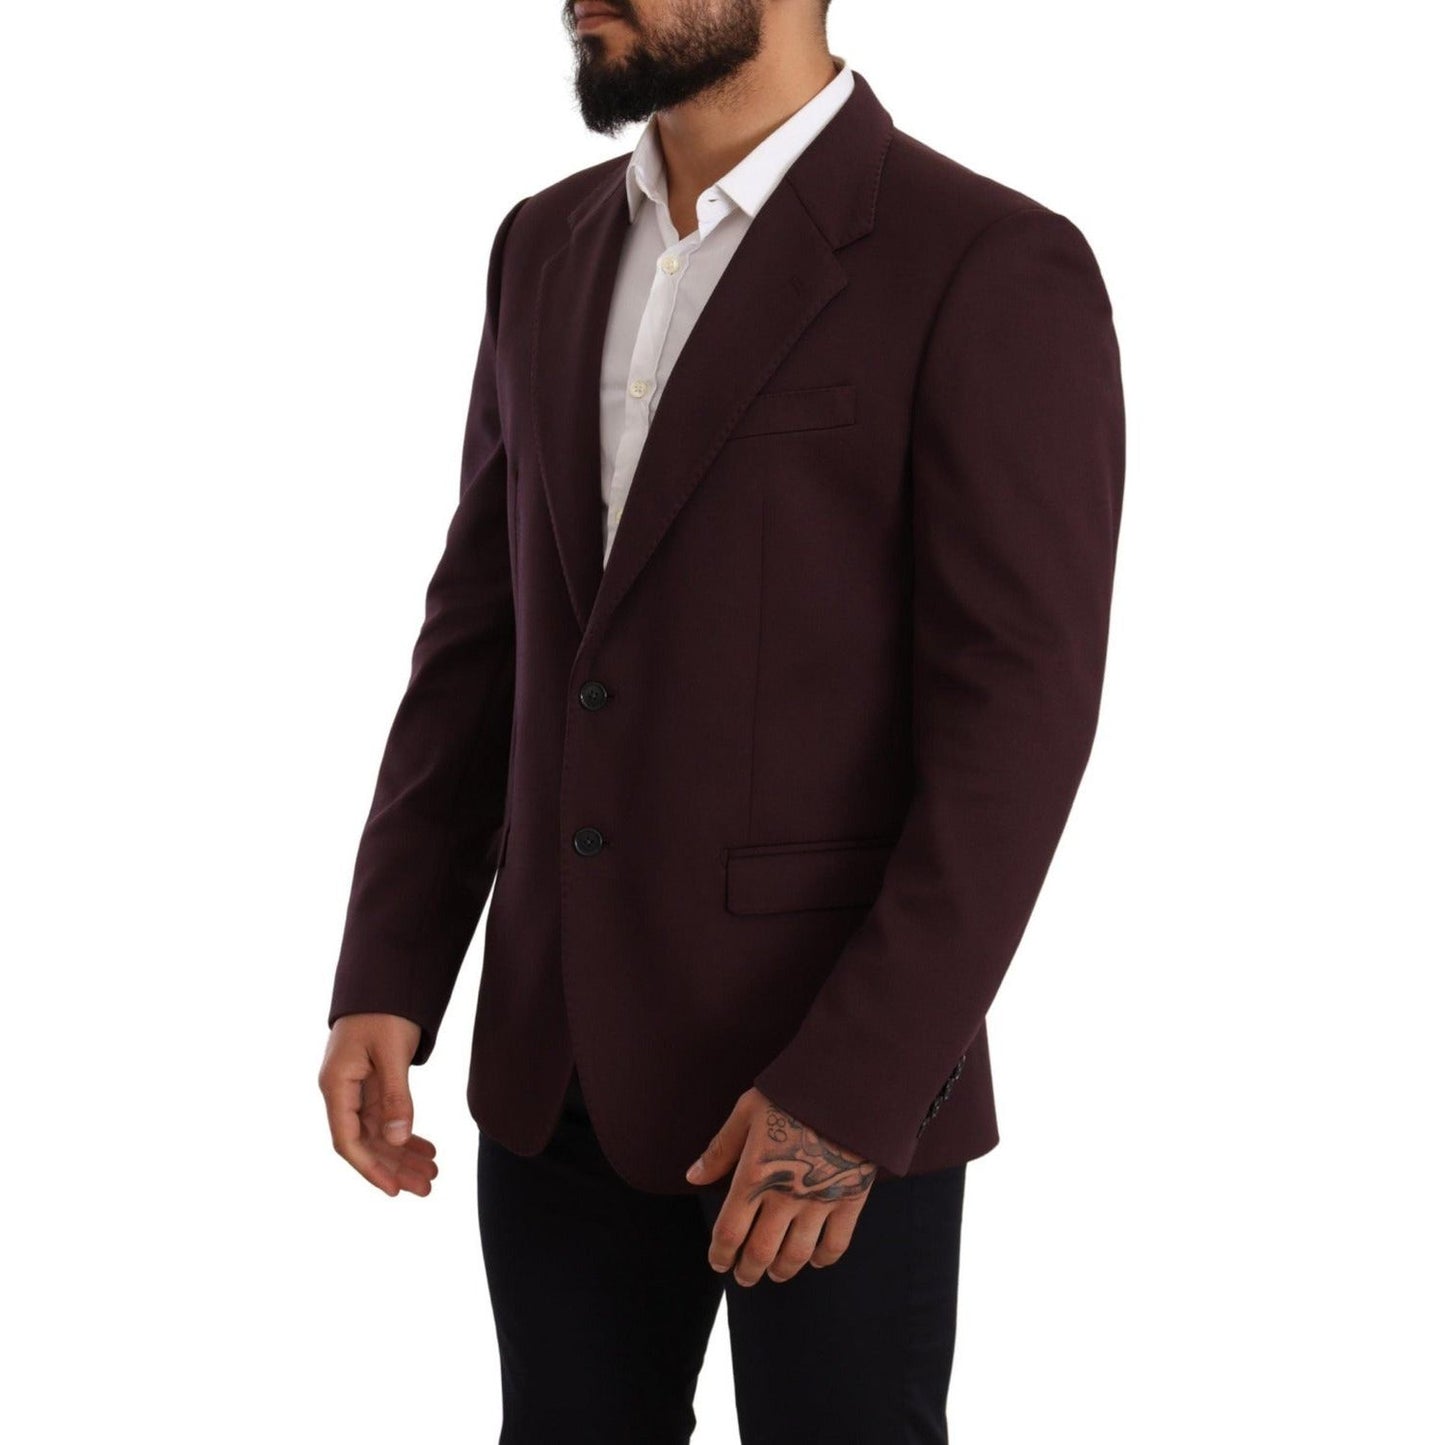 Dolce & Gabbana Elegant Indigo Slim Fit Blazer for Men purple-cotton-slim-blazer-jacket IMG_5268-scaled-14b9b3cf-b0d.jpg